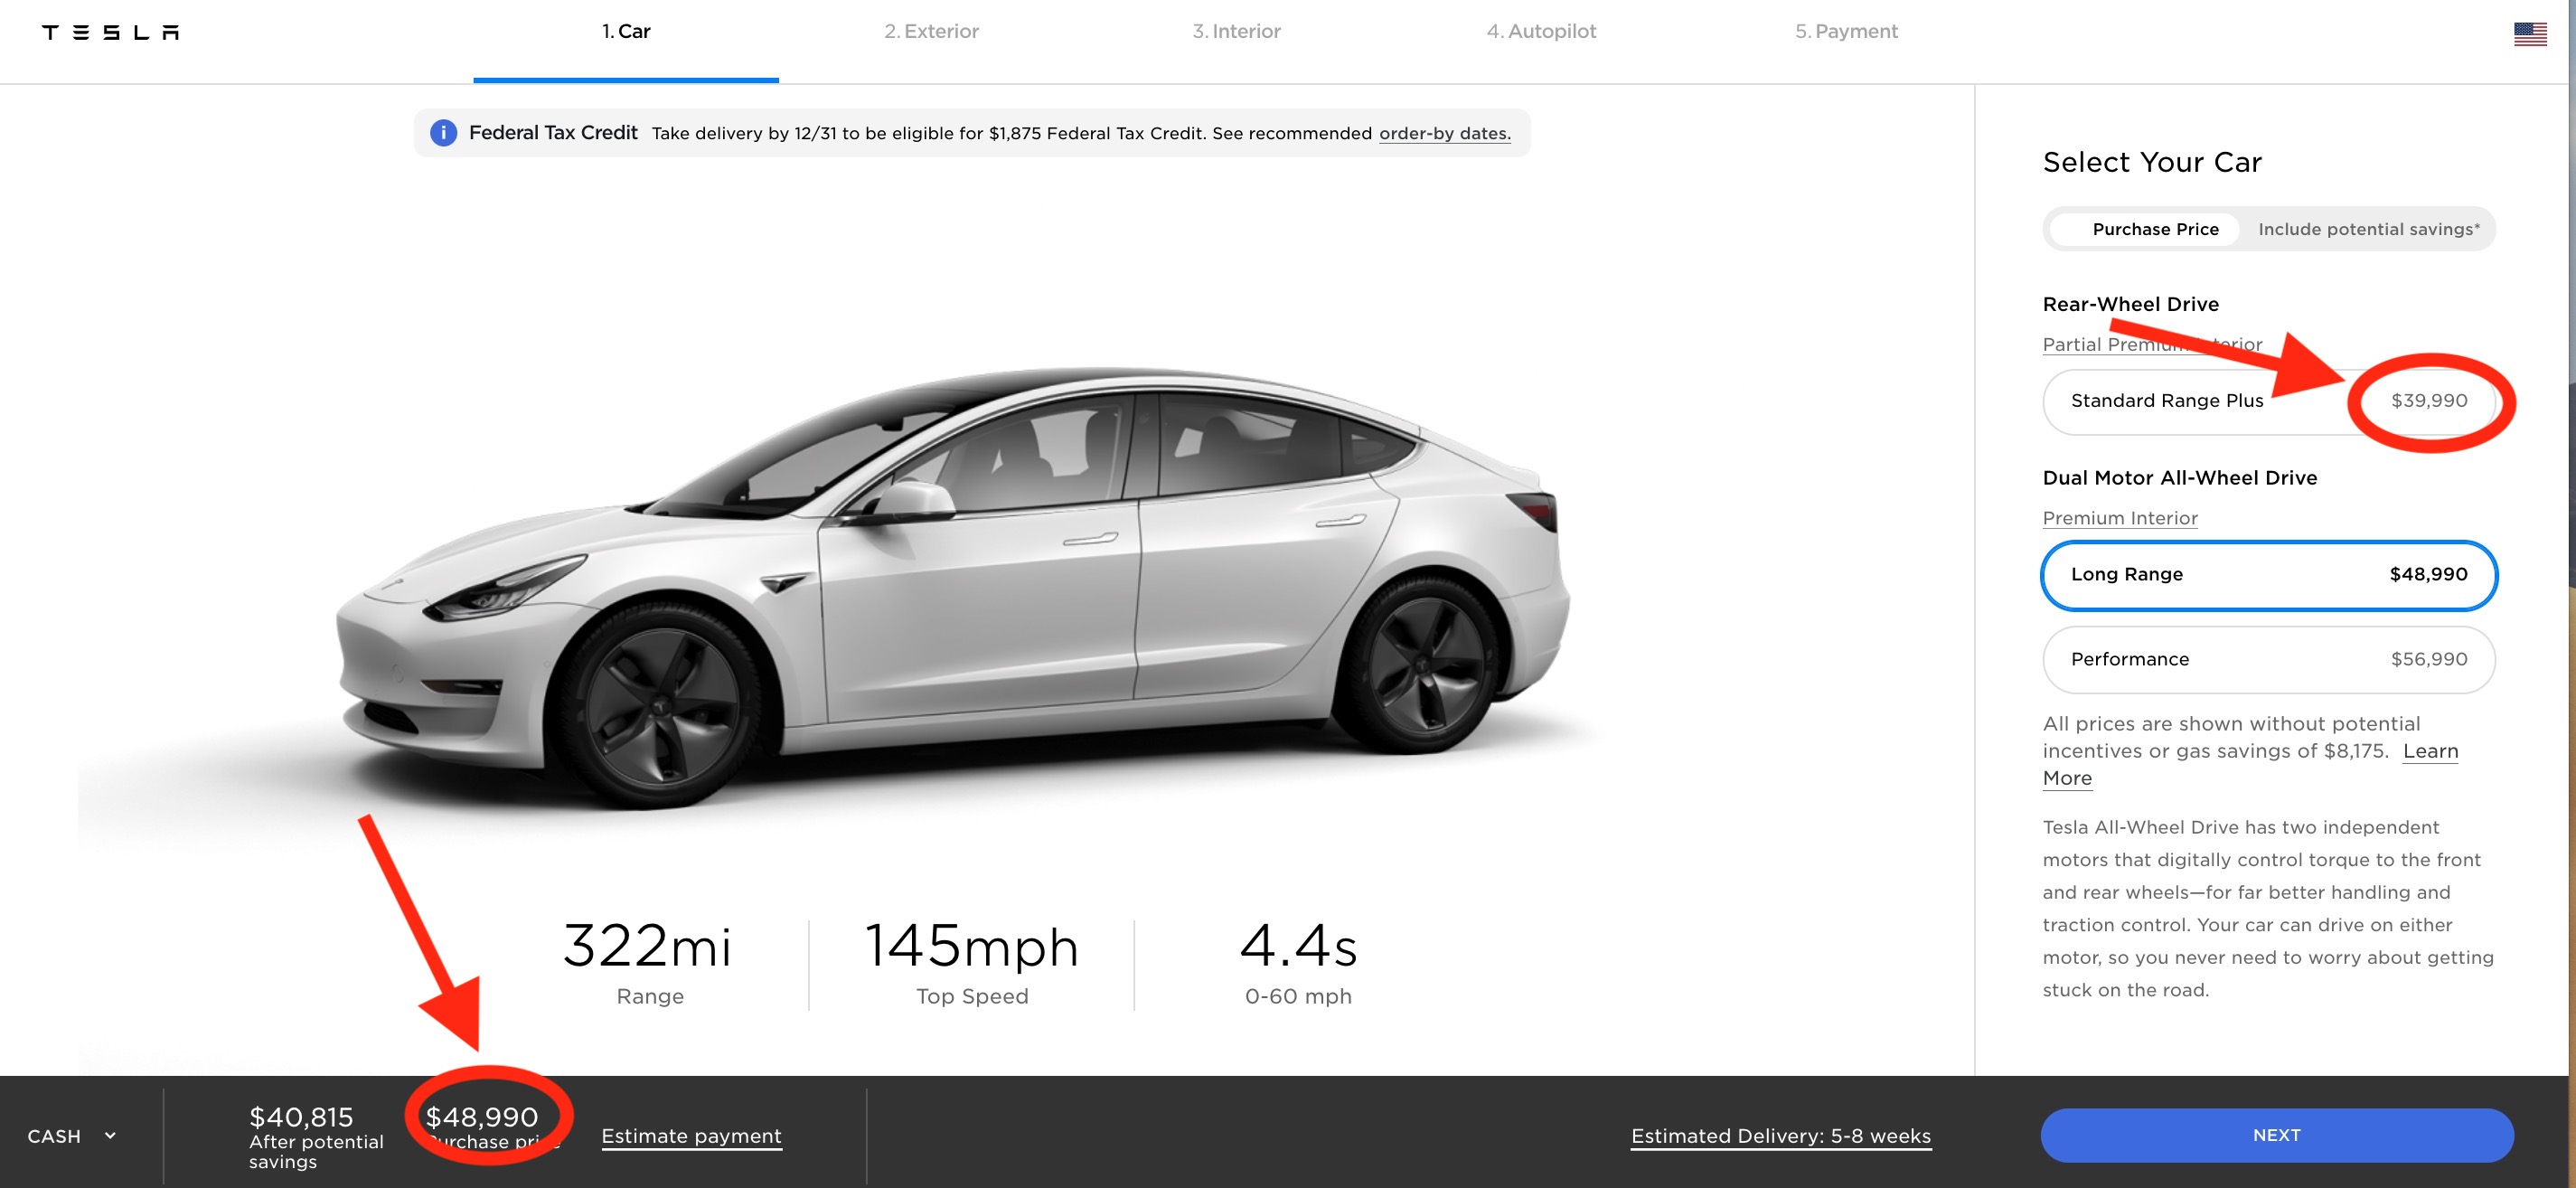 Tesla Model 3 price increase